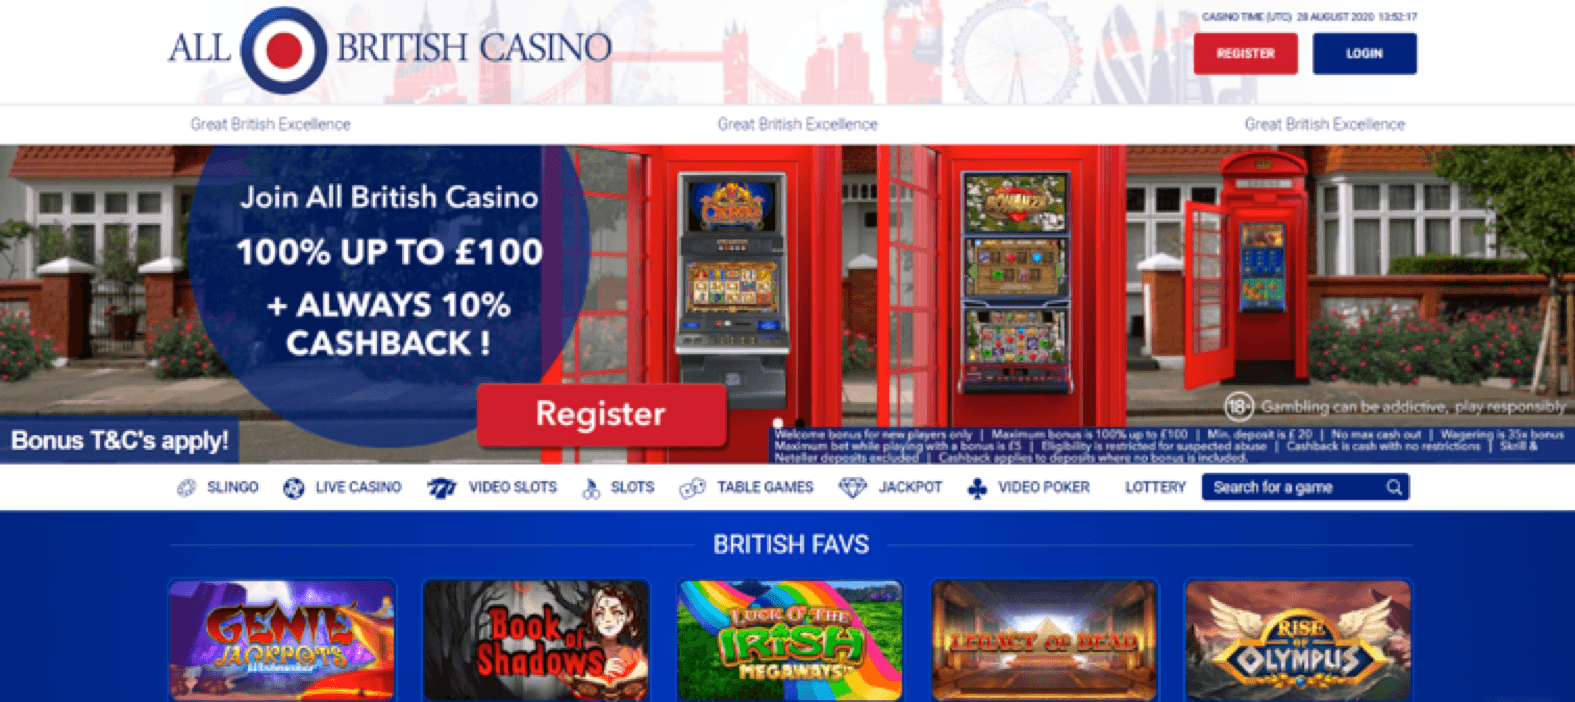 Bonus Program Review for All British Casino